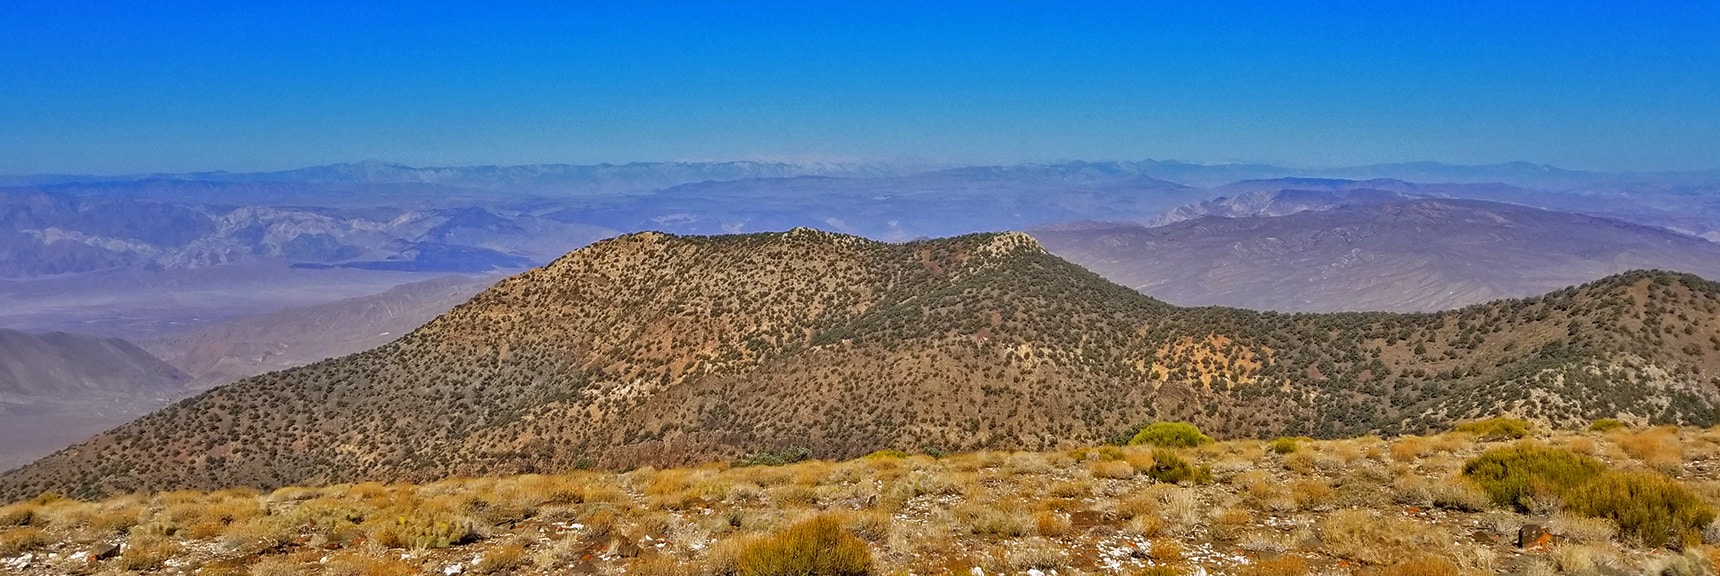 View West Toward Sierra Nevada Mountain Range from Wildrose Peak Summit | Wildrose Peak | Panamint Mountain Range | Death Valley National Park, California